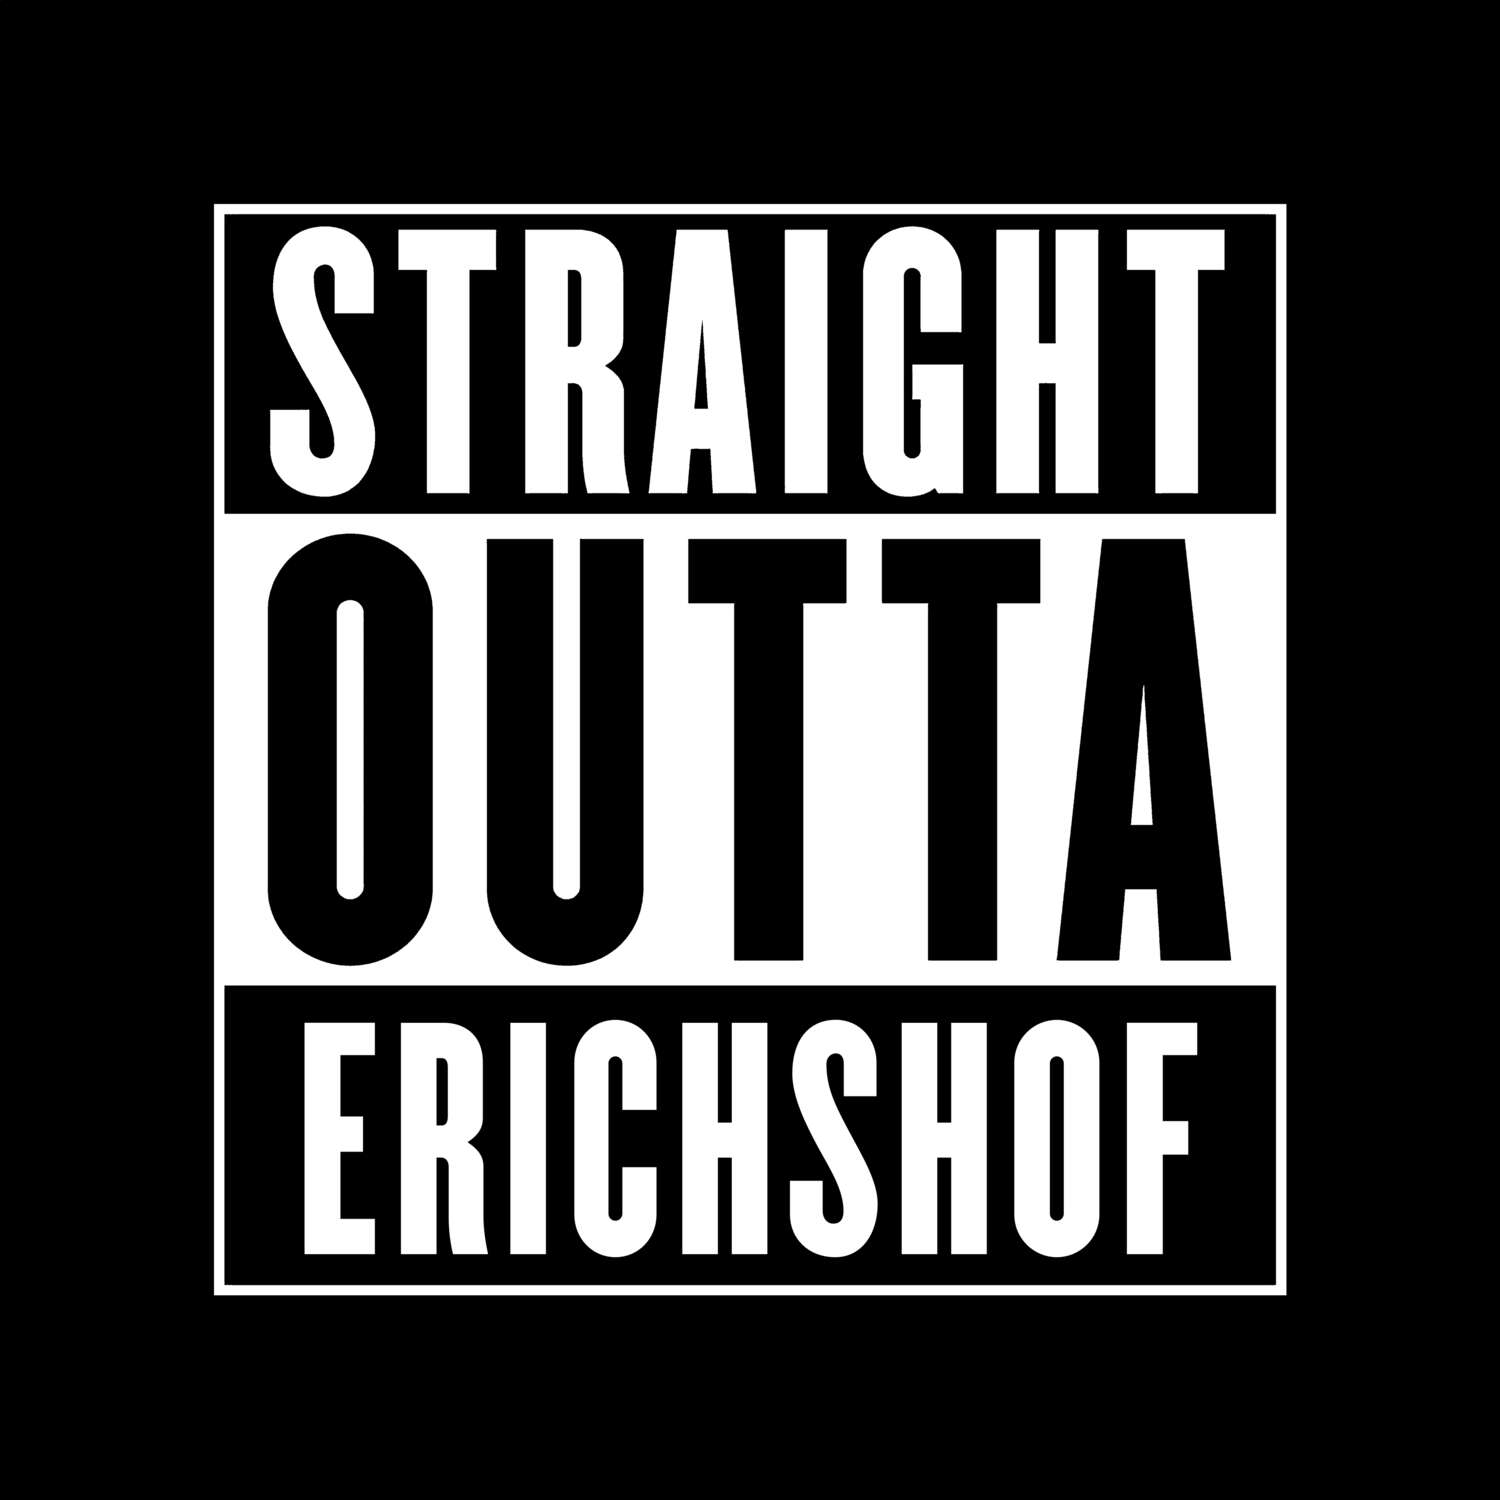 Erichshof T-Shirt »Straight Outta«